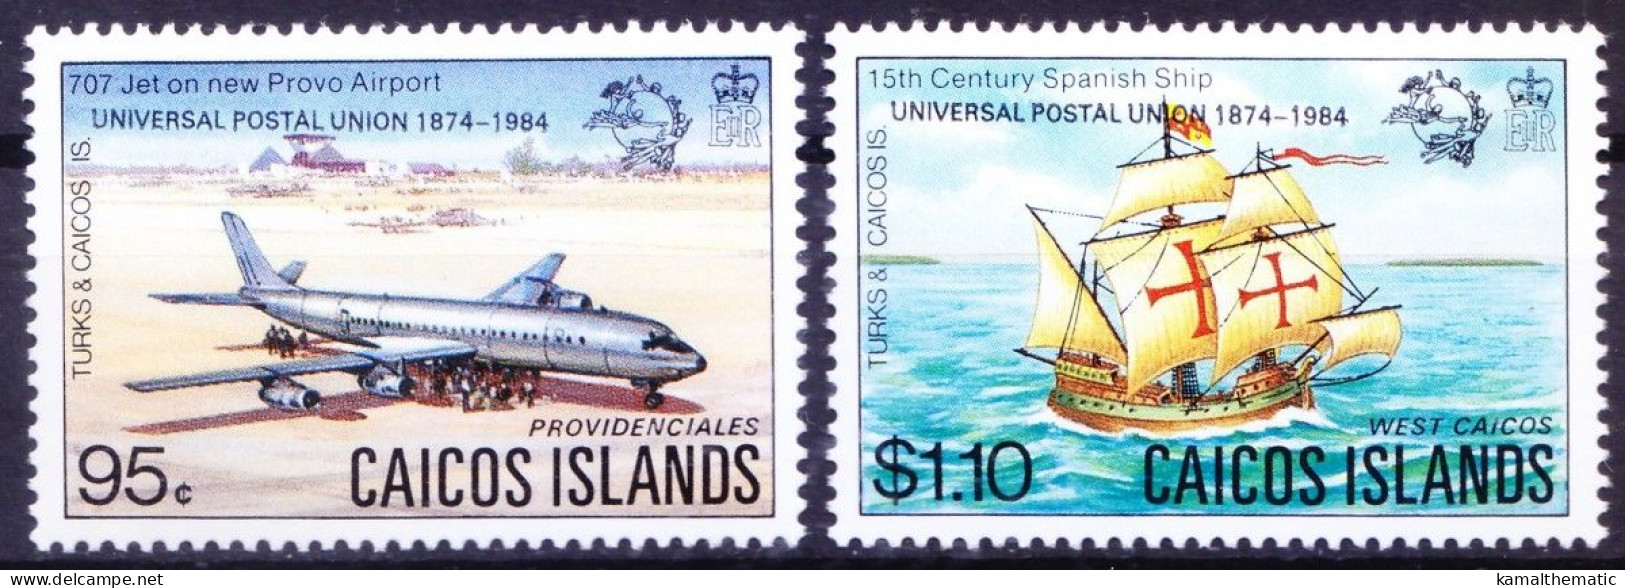 Caicos Islands 1984 MNH 2v, U.P.U. Hamburg, Overprint - UPU (Unión Postal Universal)